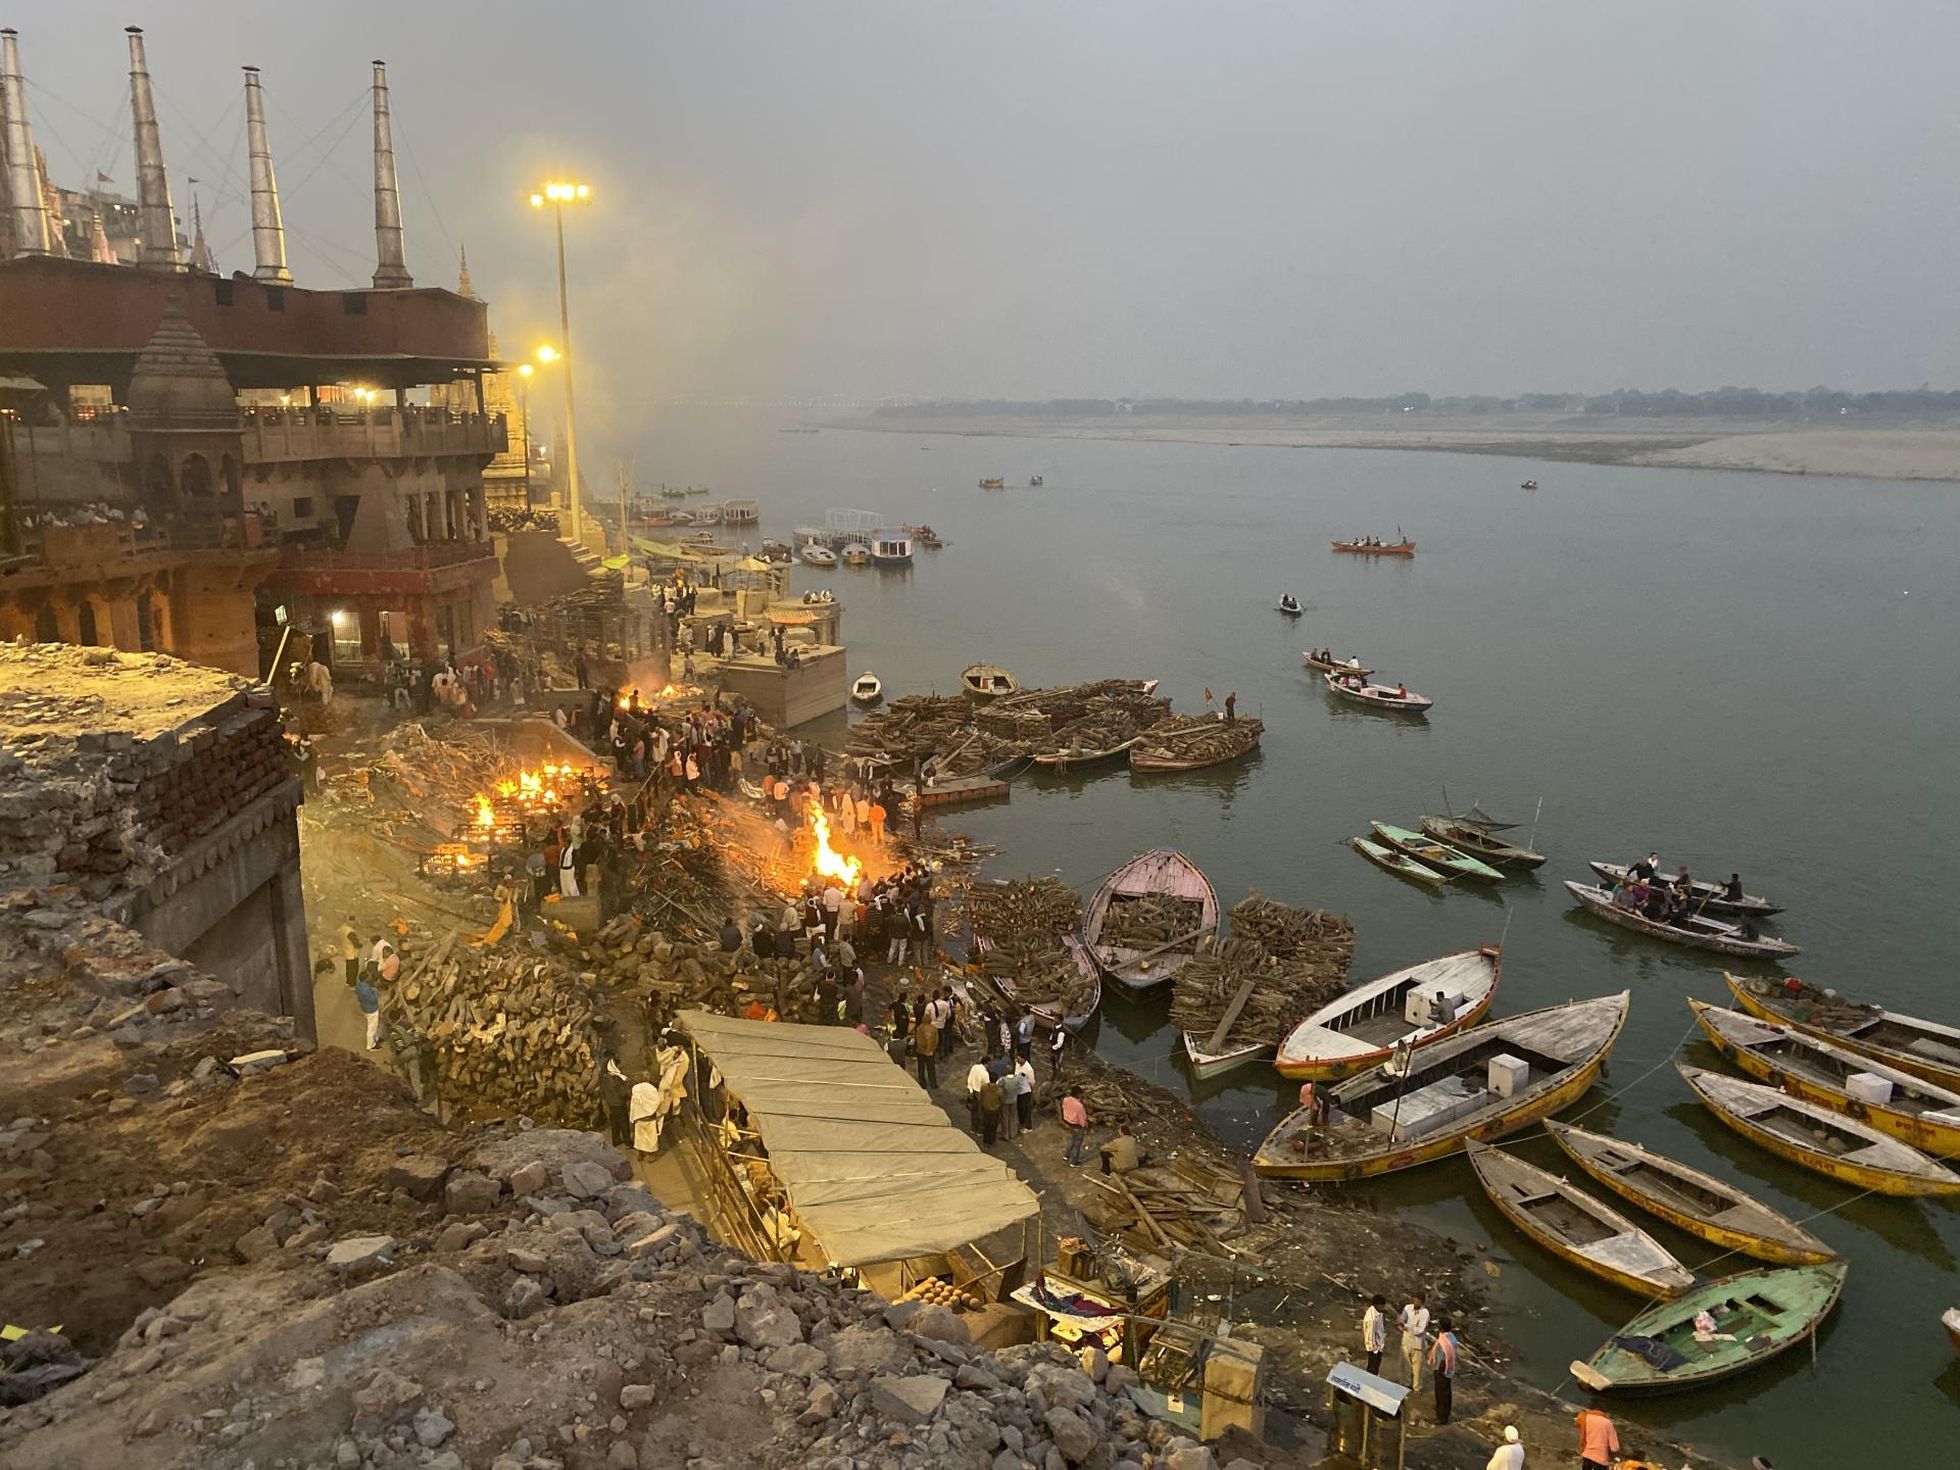 Gangese surnute tuleriit.